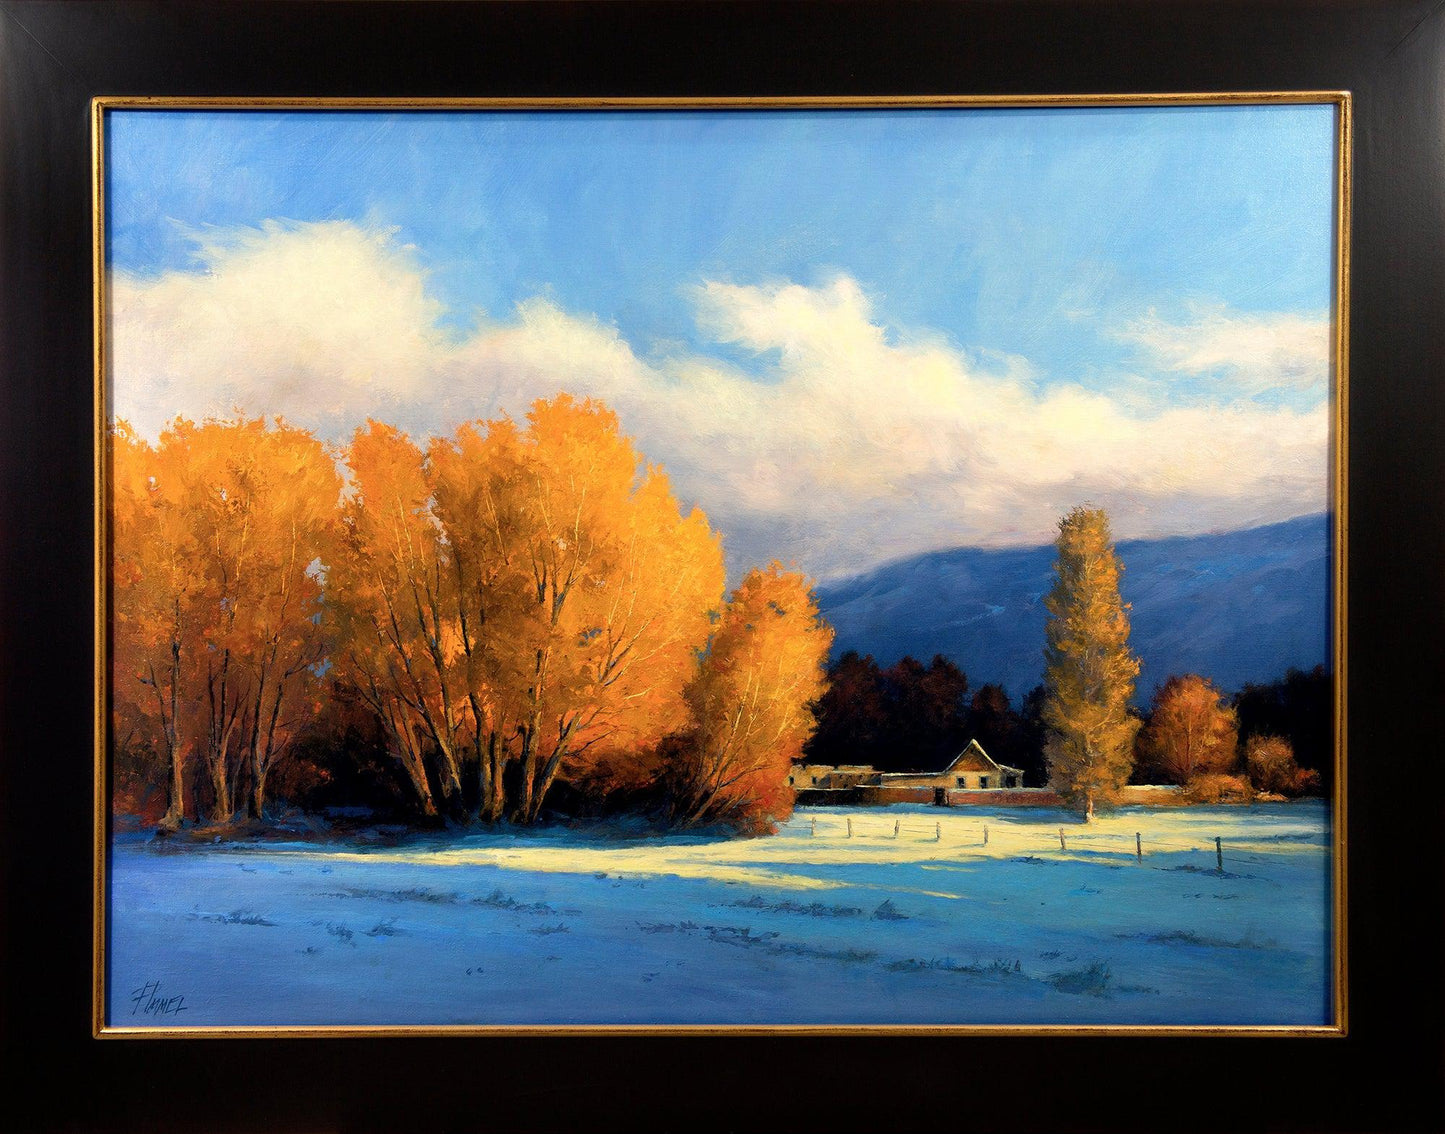 Willow Wonderland-Painting-Peggy Immel-Sorrel Sky Gallery